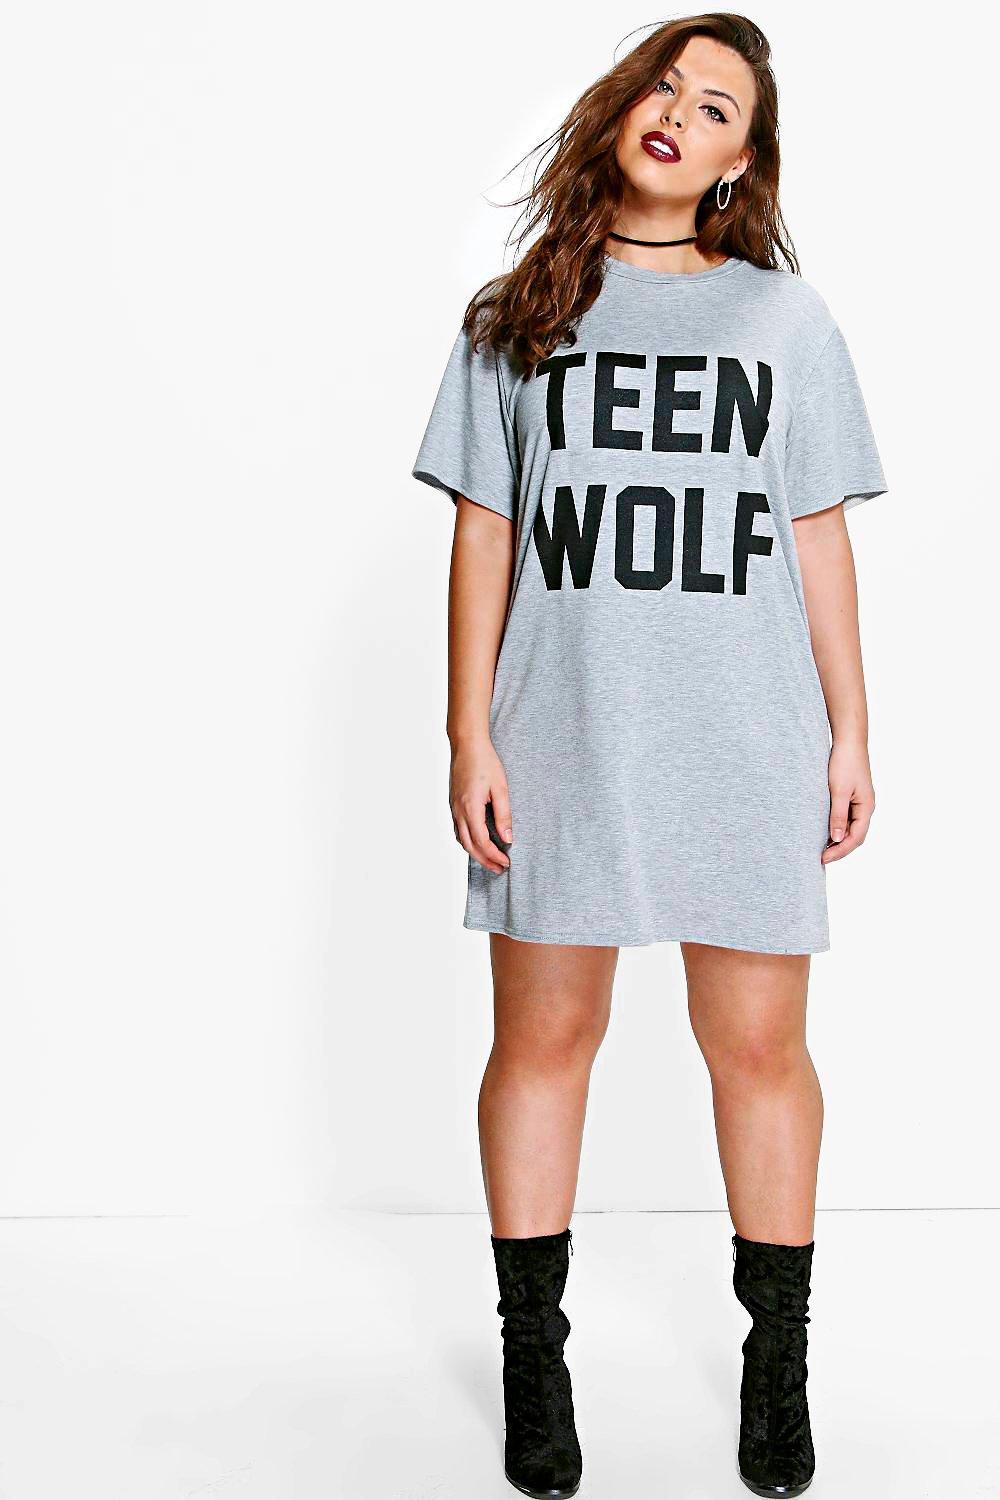 t shirt dresses for teens